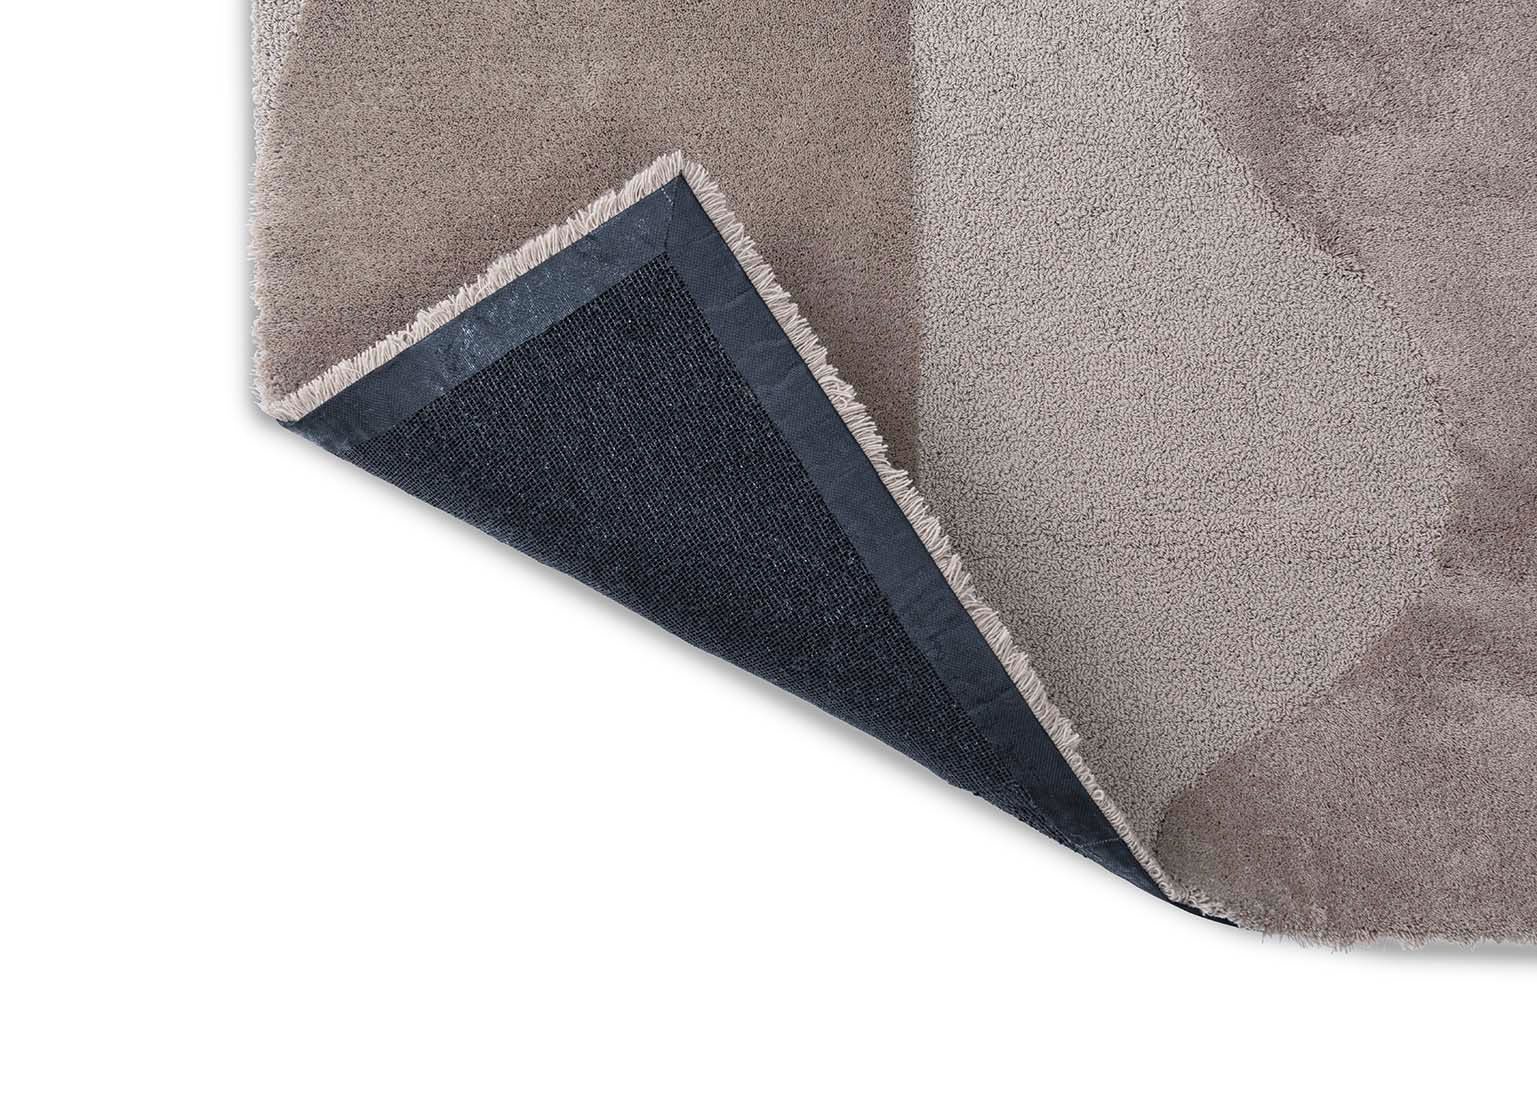 beige wool rug with geometric textured design
